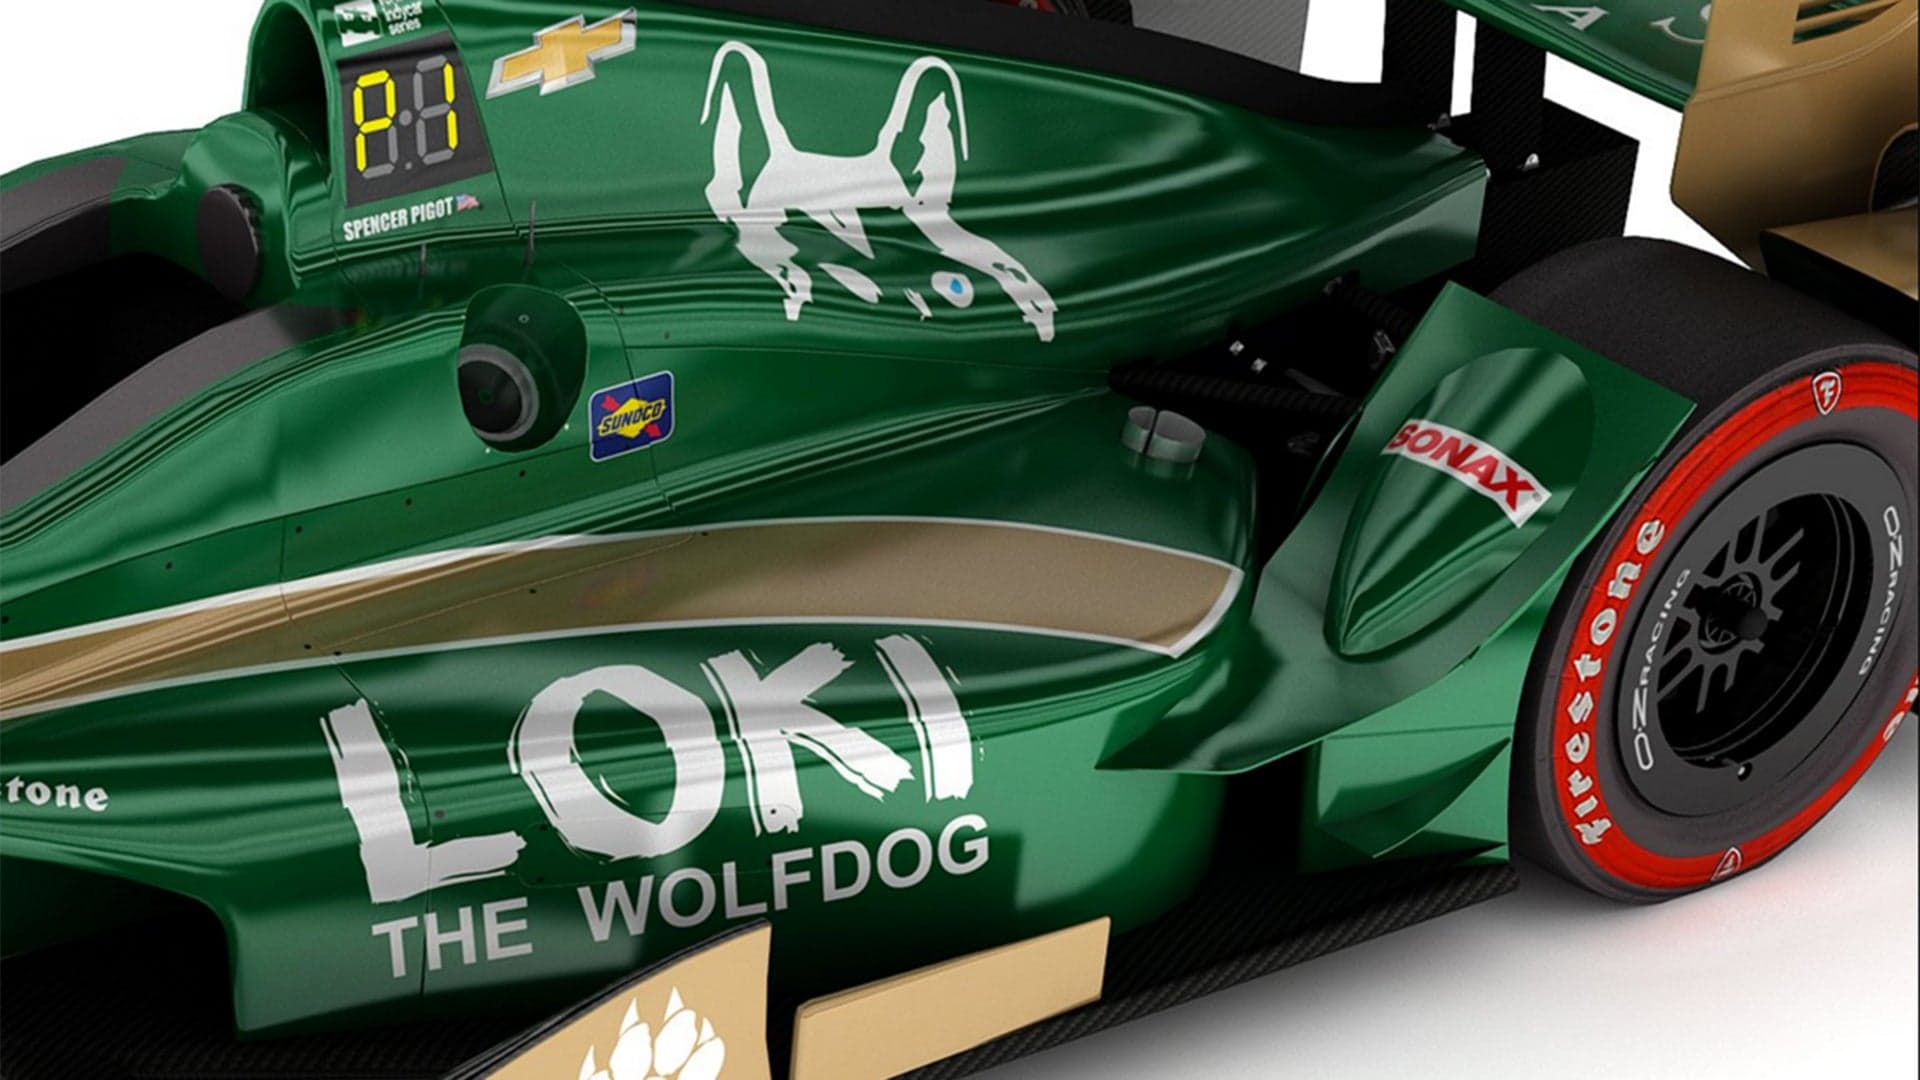 Instagram-Famous Dog to Sponsor IndyCar Driver Spencer Pigot in Long Beach Grand Prix